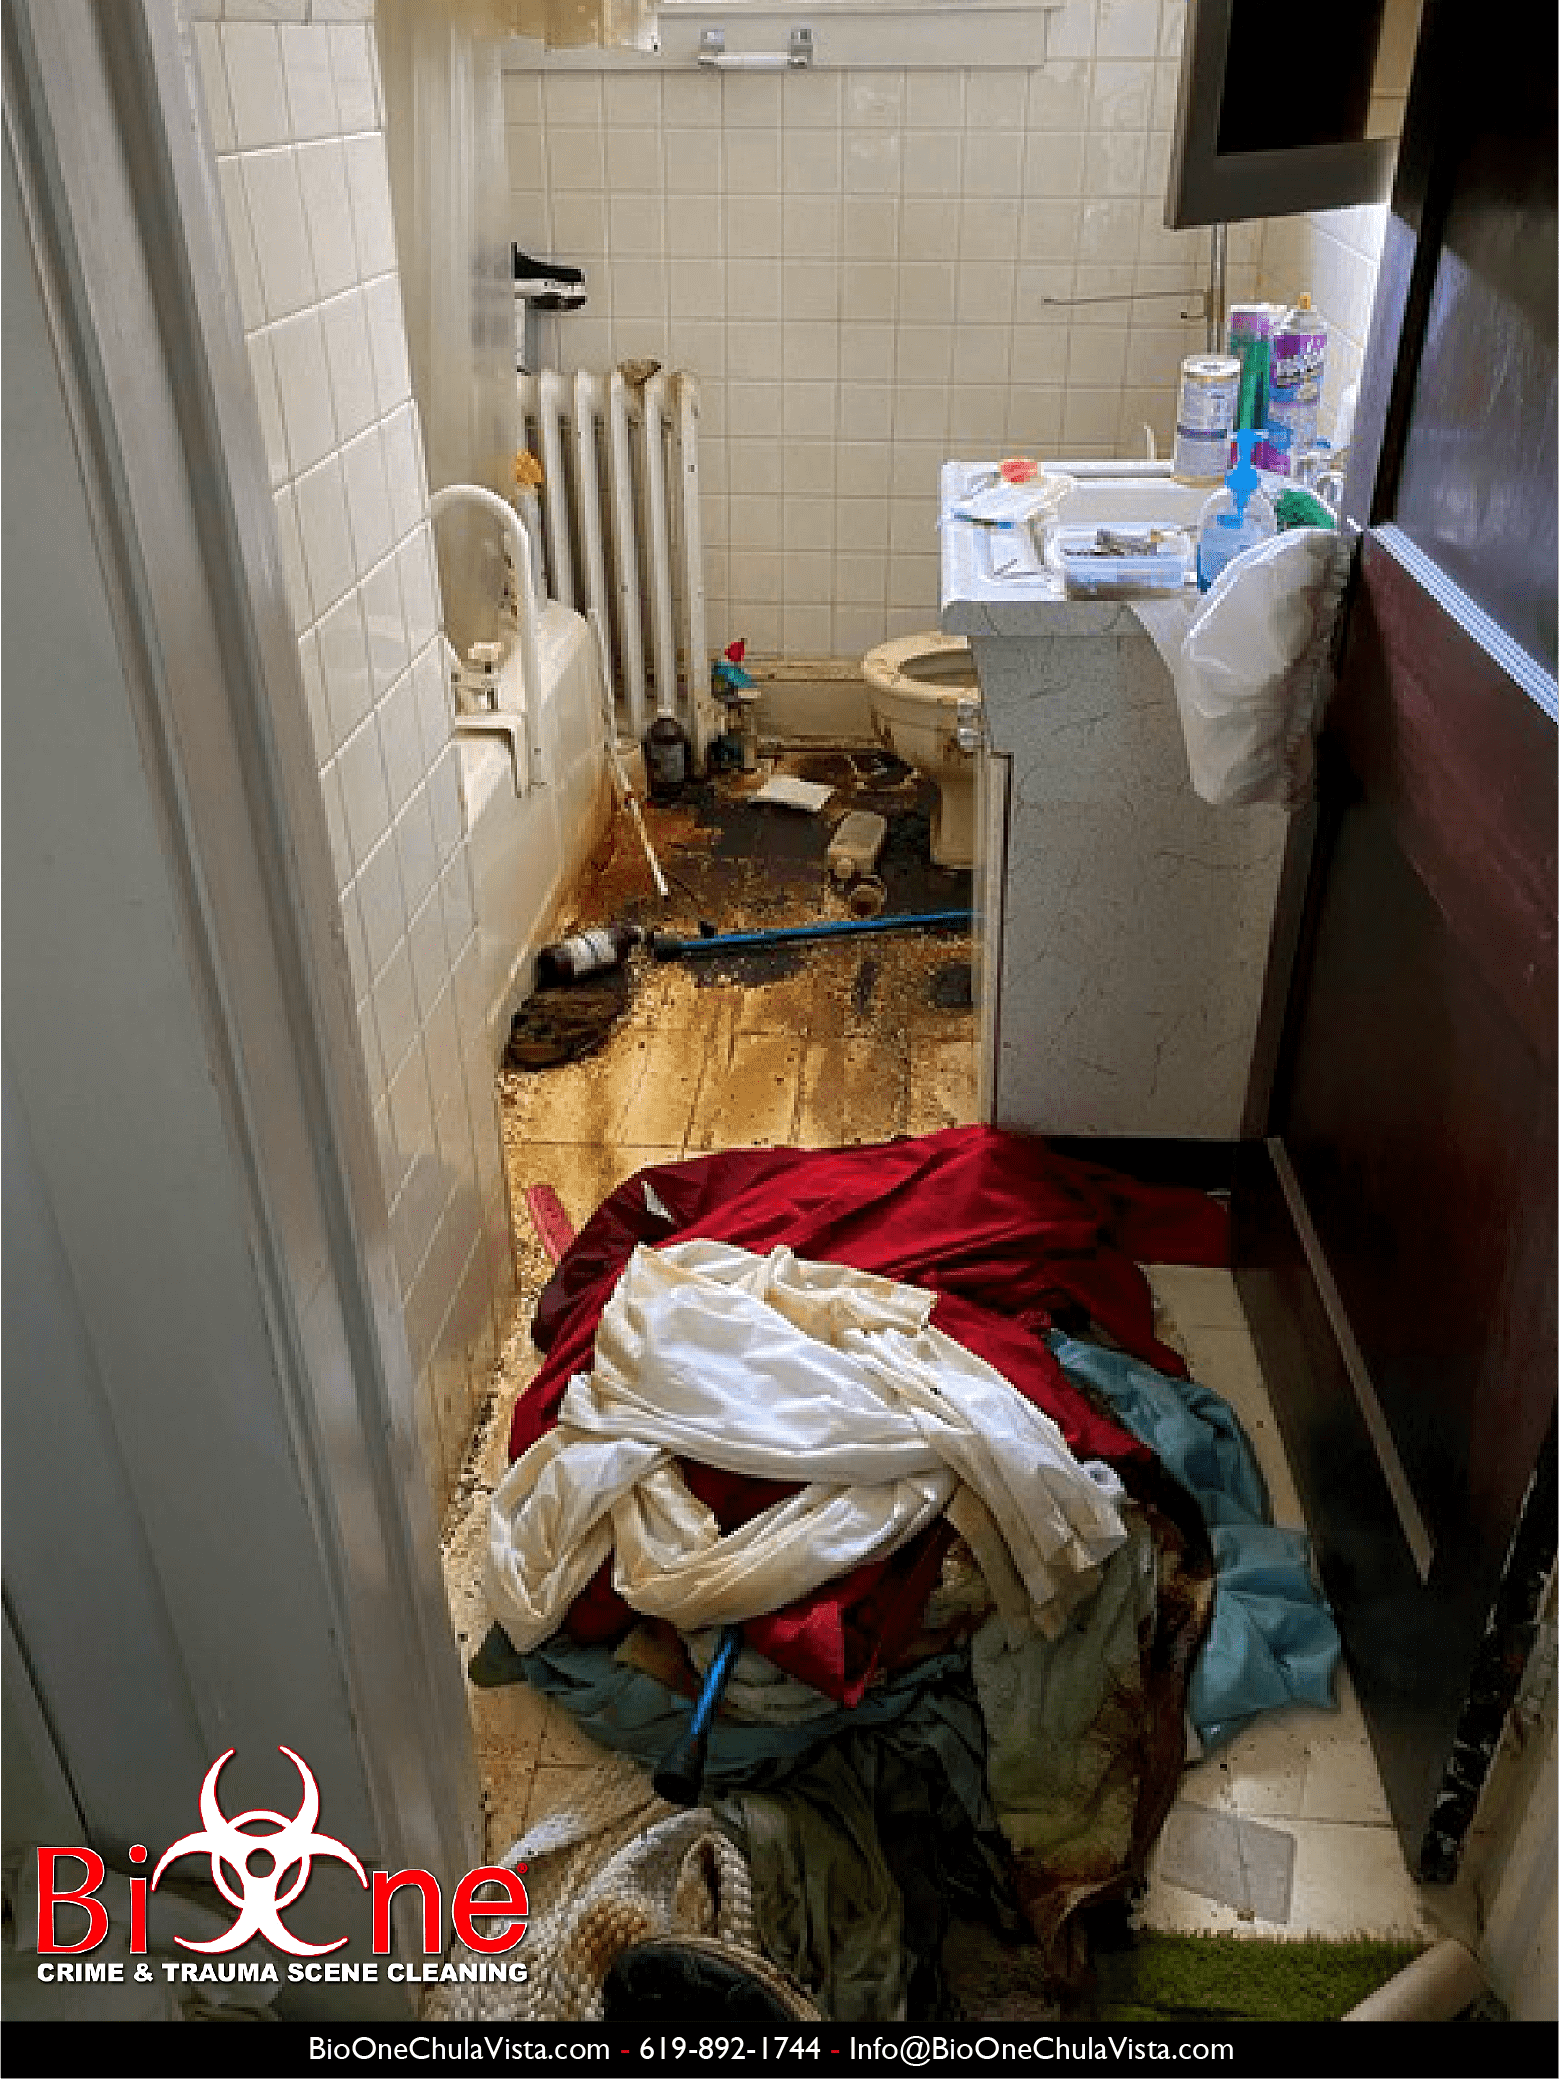 Image shows sewage backup in bathroom area. 